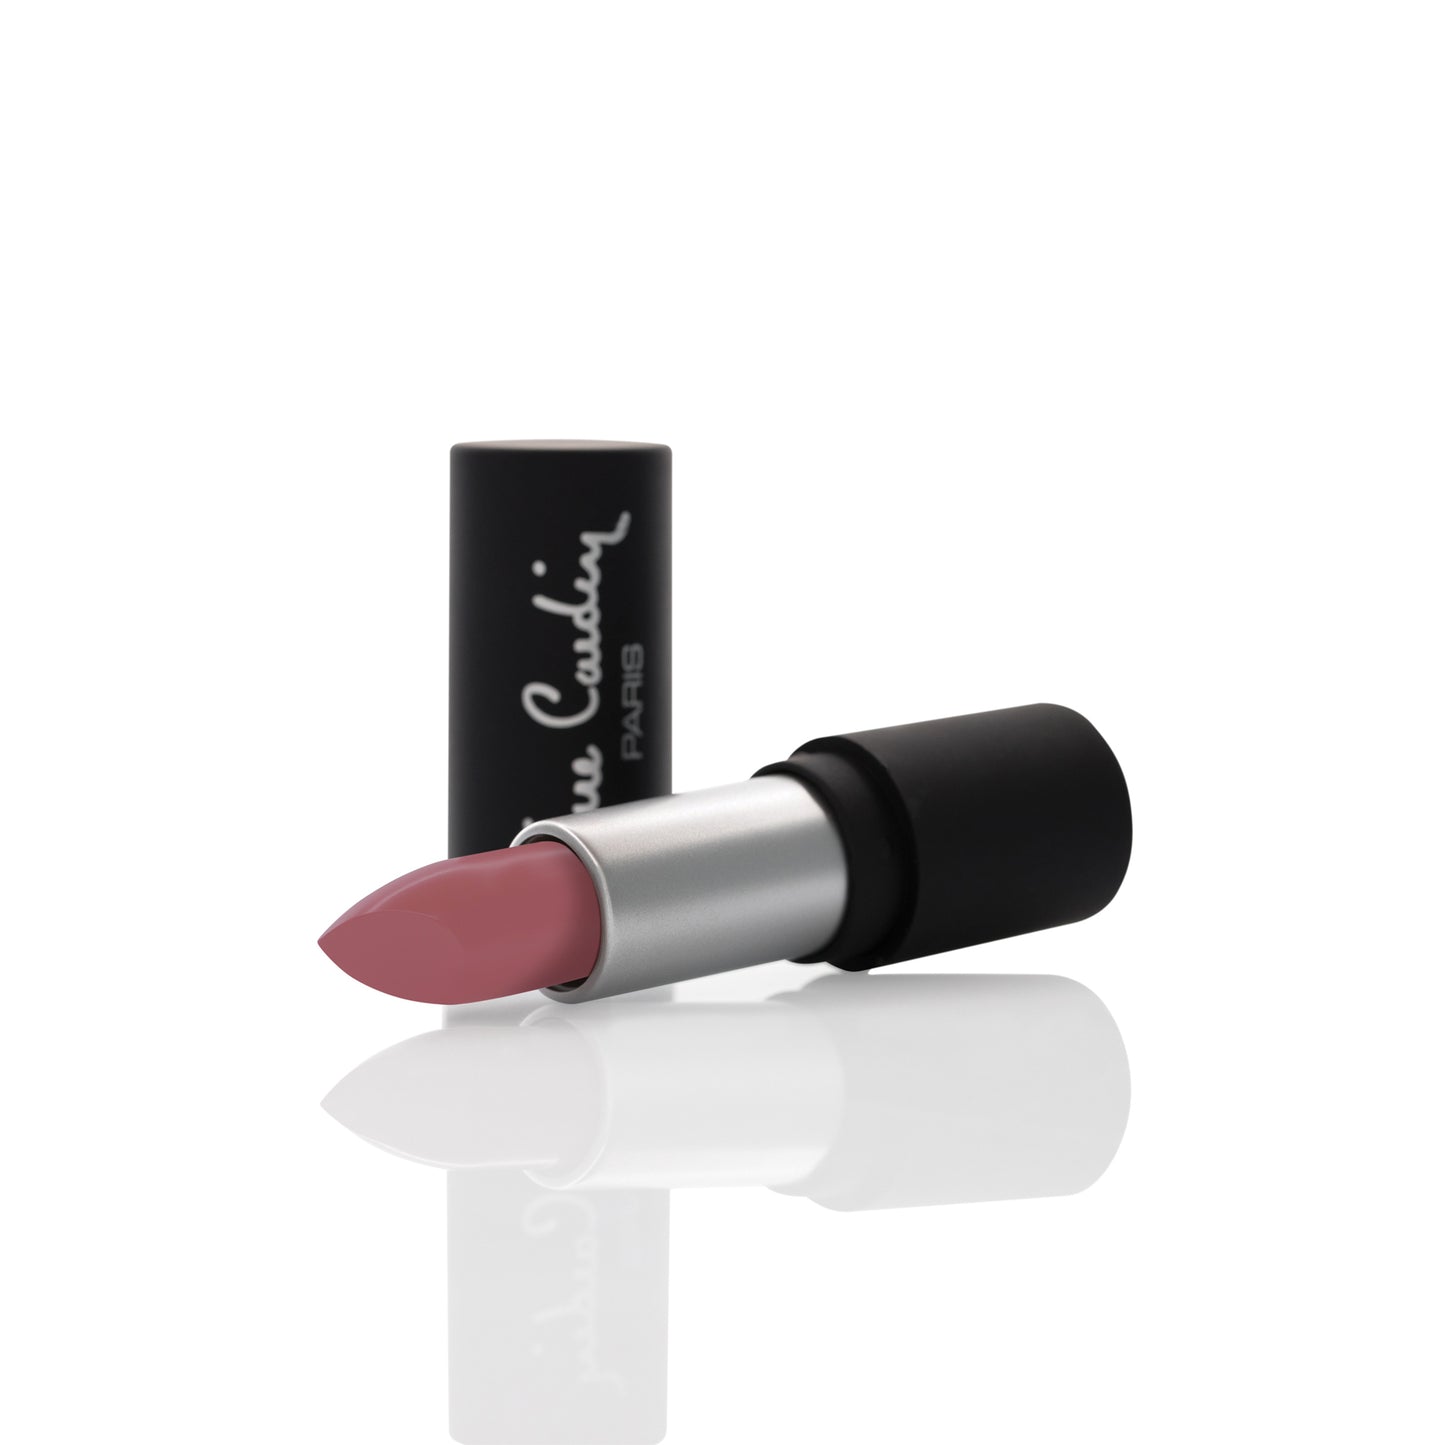 Pierre Cardin Matte Chiffon Touch Lipstick  Rosy Red 178 - 4 gr